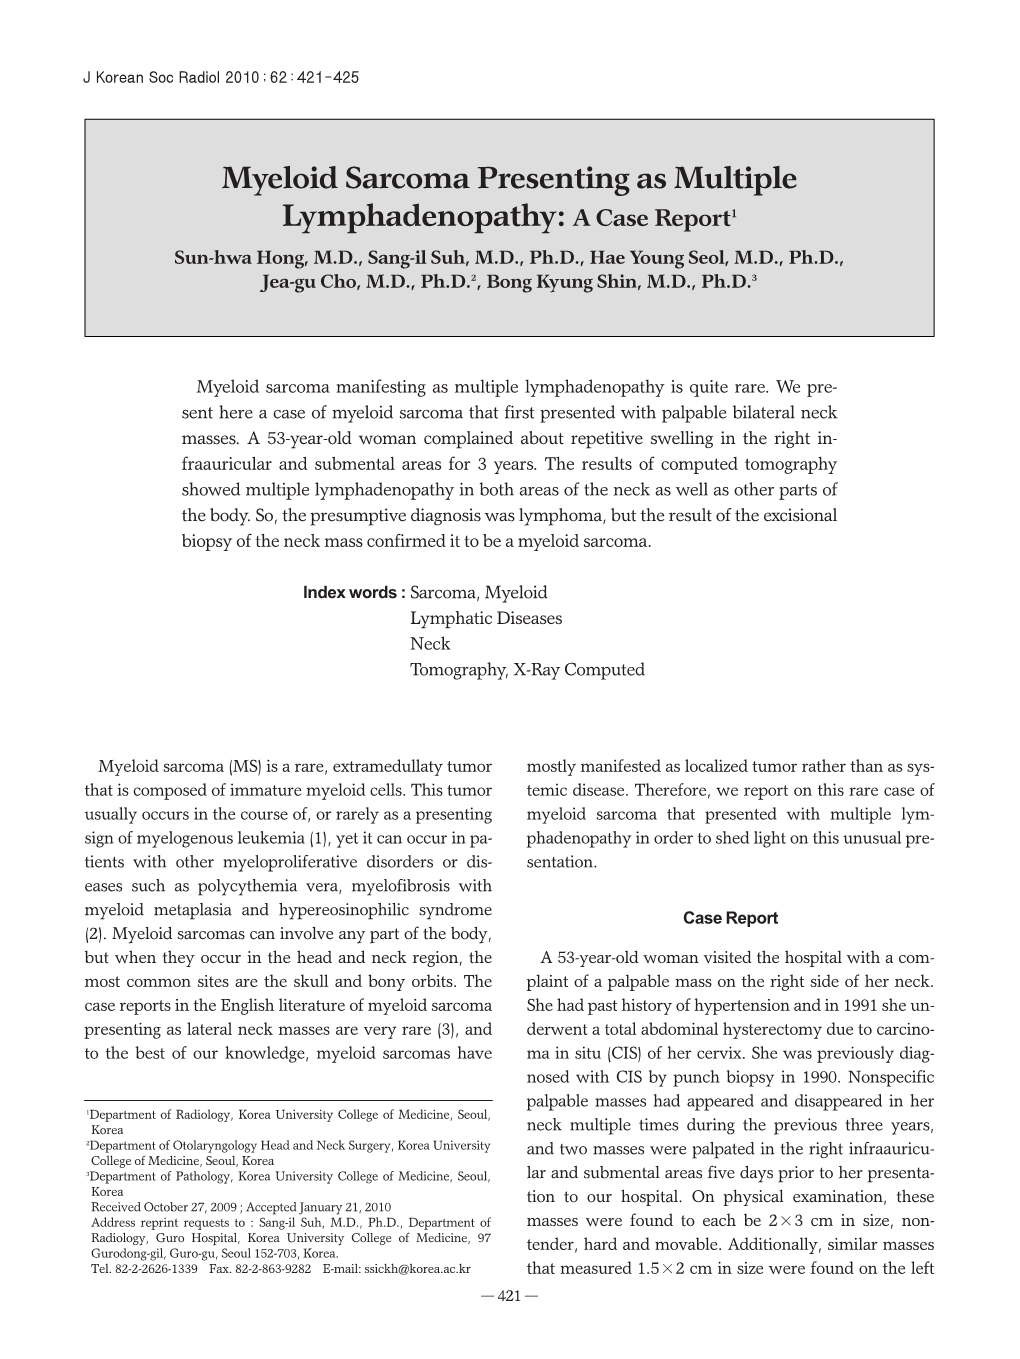 Myeloid Sarcoma Presenting As Multiple Lymphadenopathy: a Case